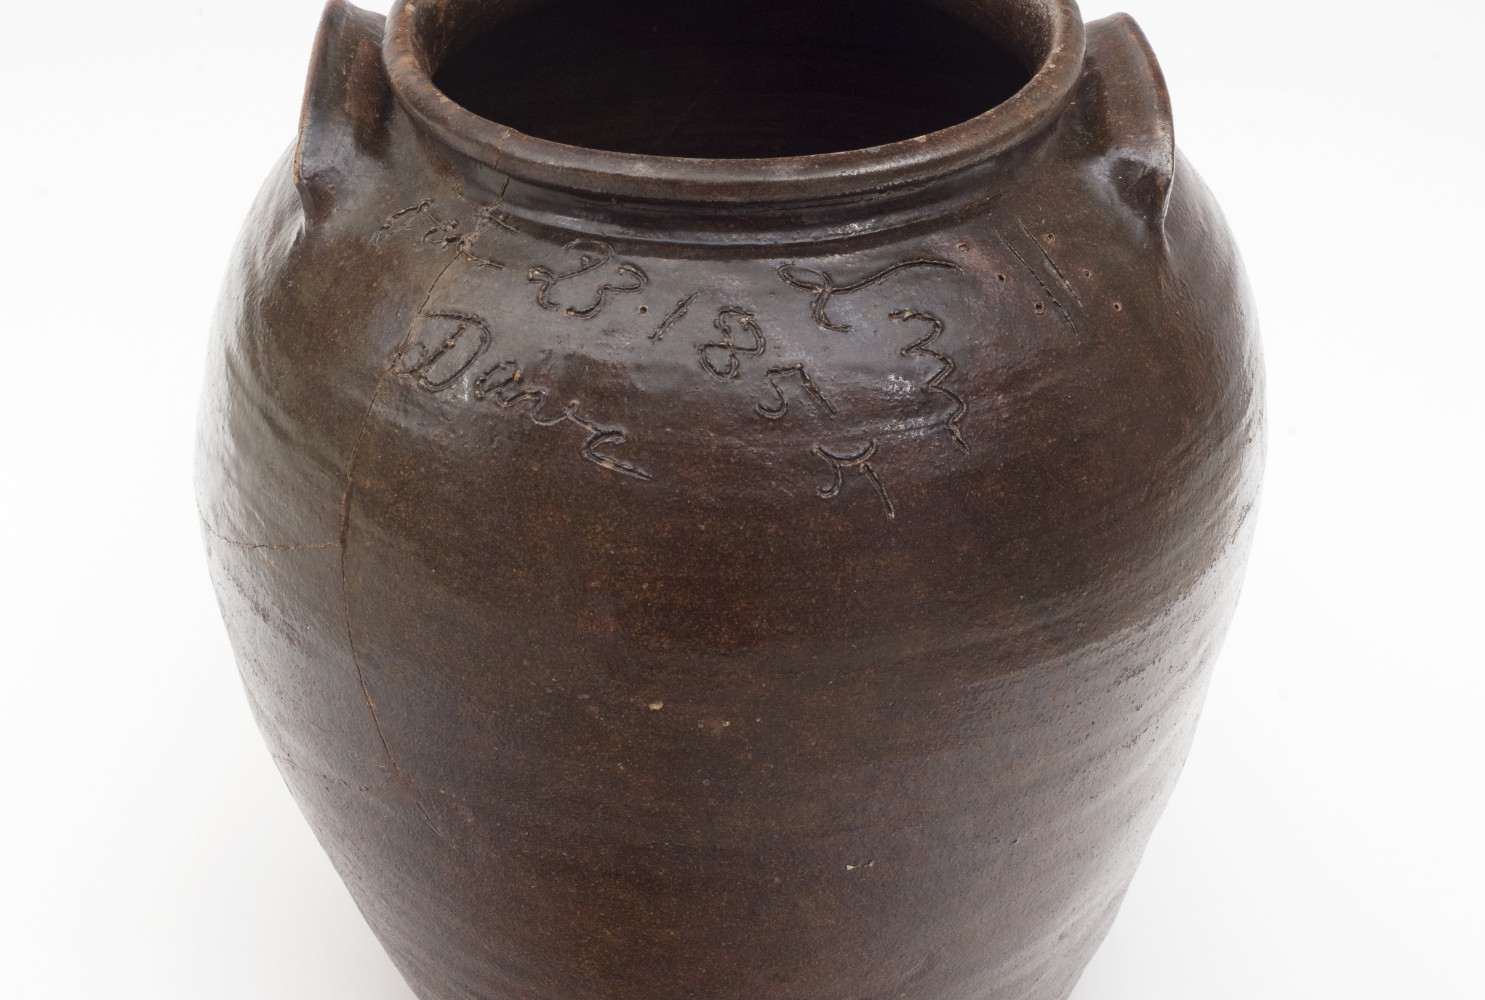 Storage Jar, 1855, by David (Dave) Drake (American, 1801 - ca.1870);
Alkaline-glazed stoneware; Signed 